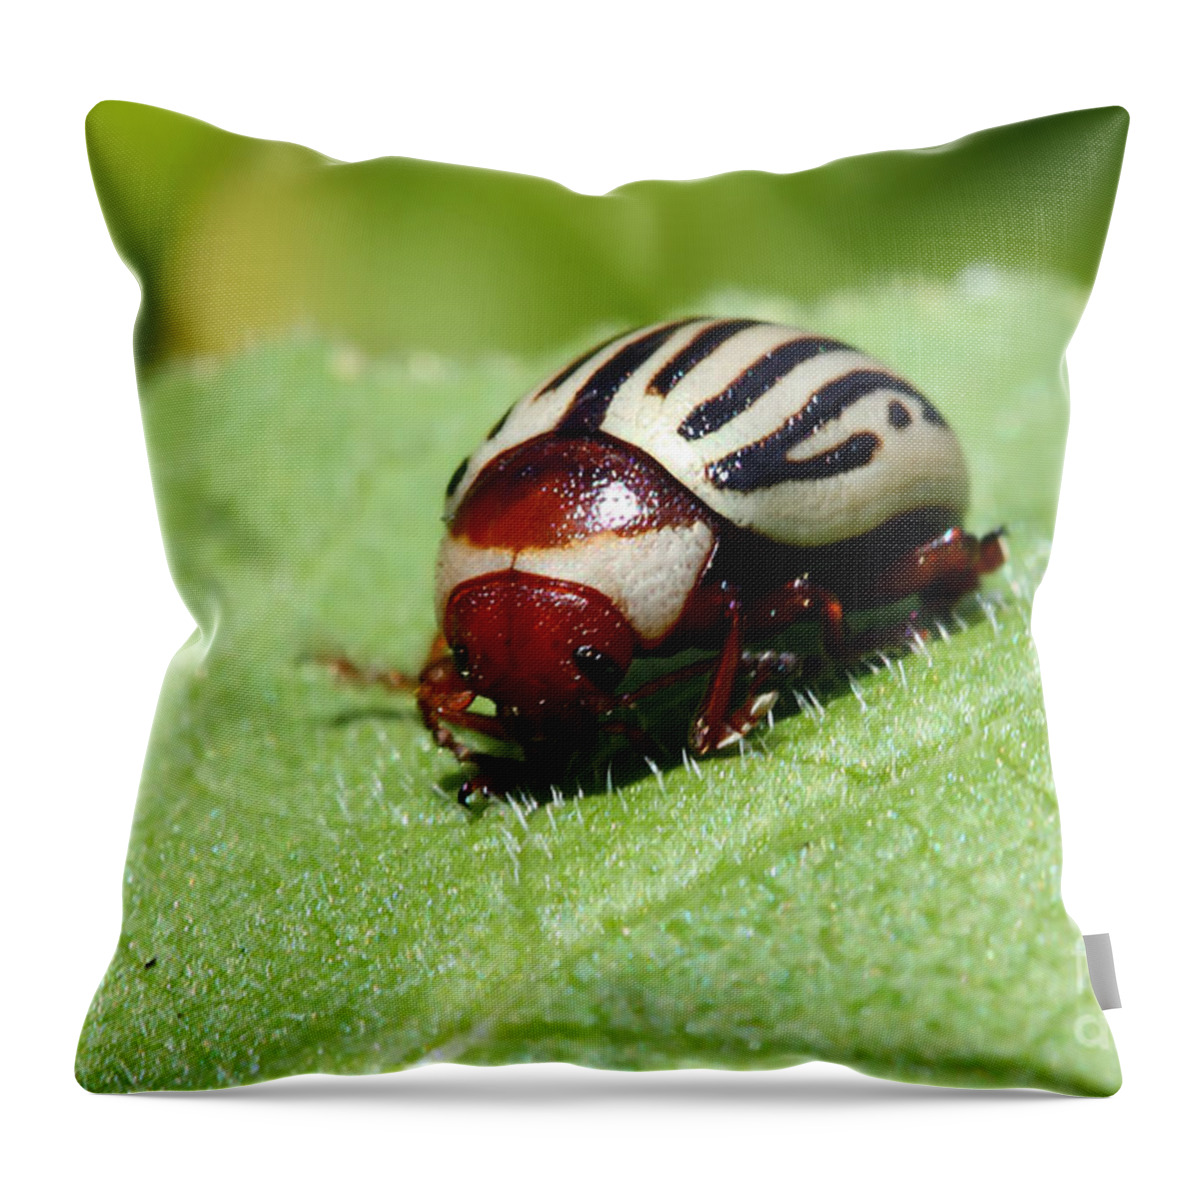 Bug Throw Pillow featuring the photograph Sunflower Beetle by Teresa Zieba